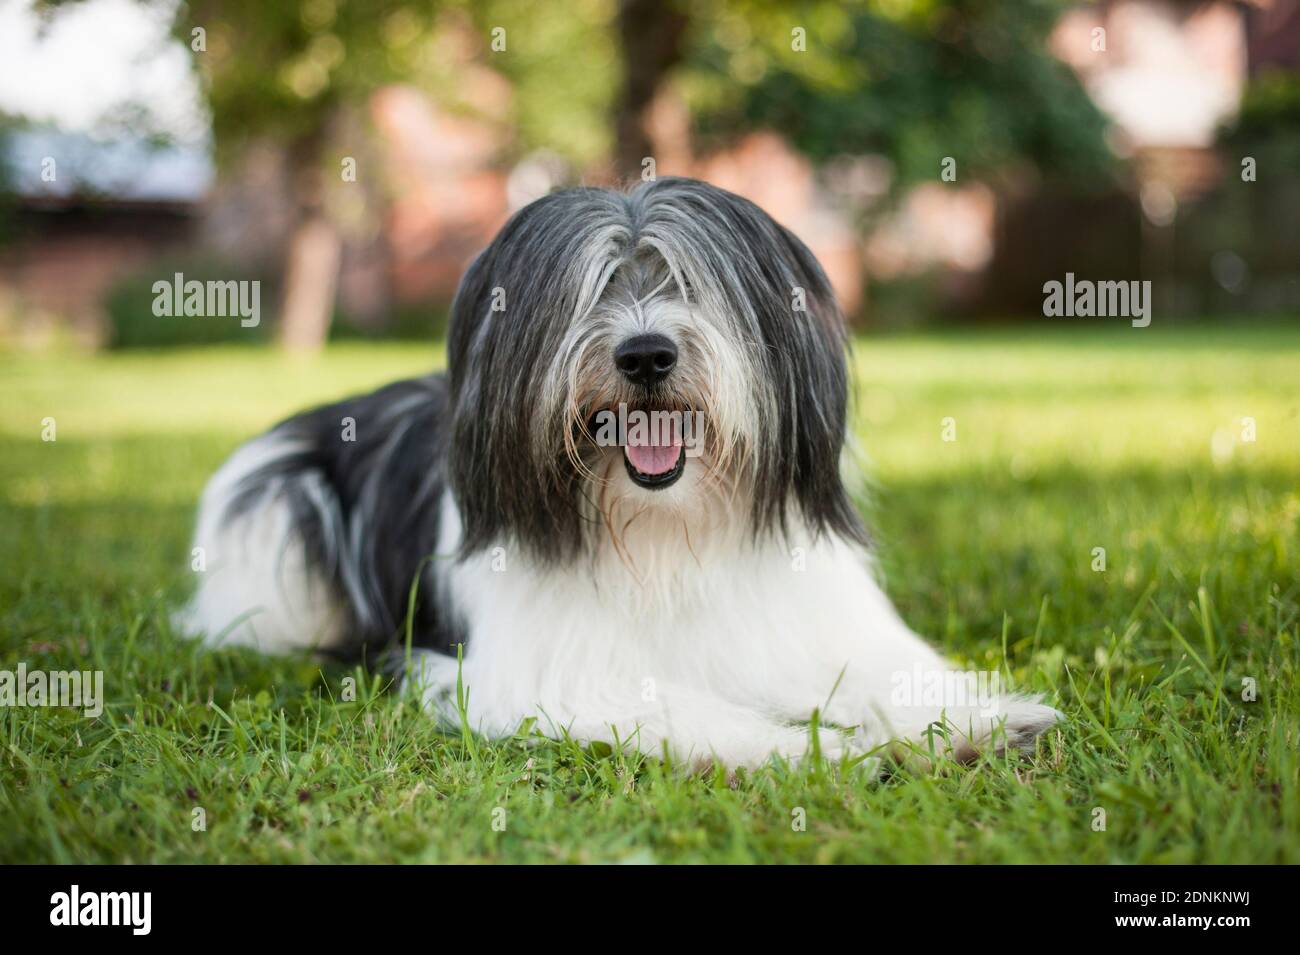 Polish Lowland Sheepdog. Adult dog lying on a lawn. Germany Stock Photo